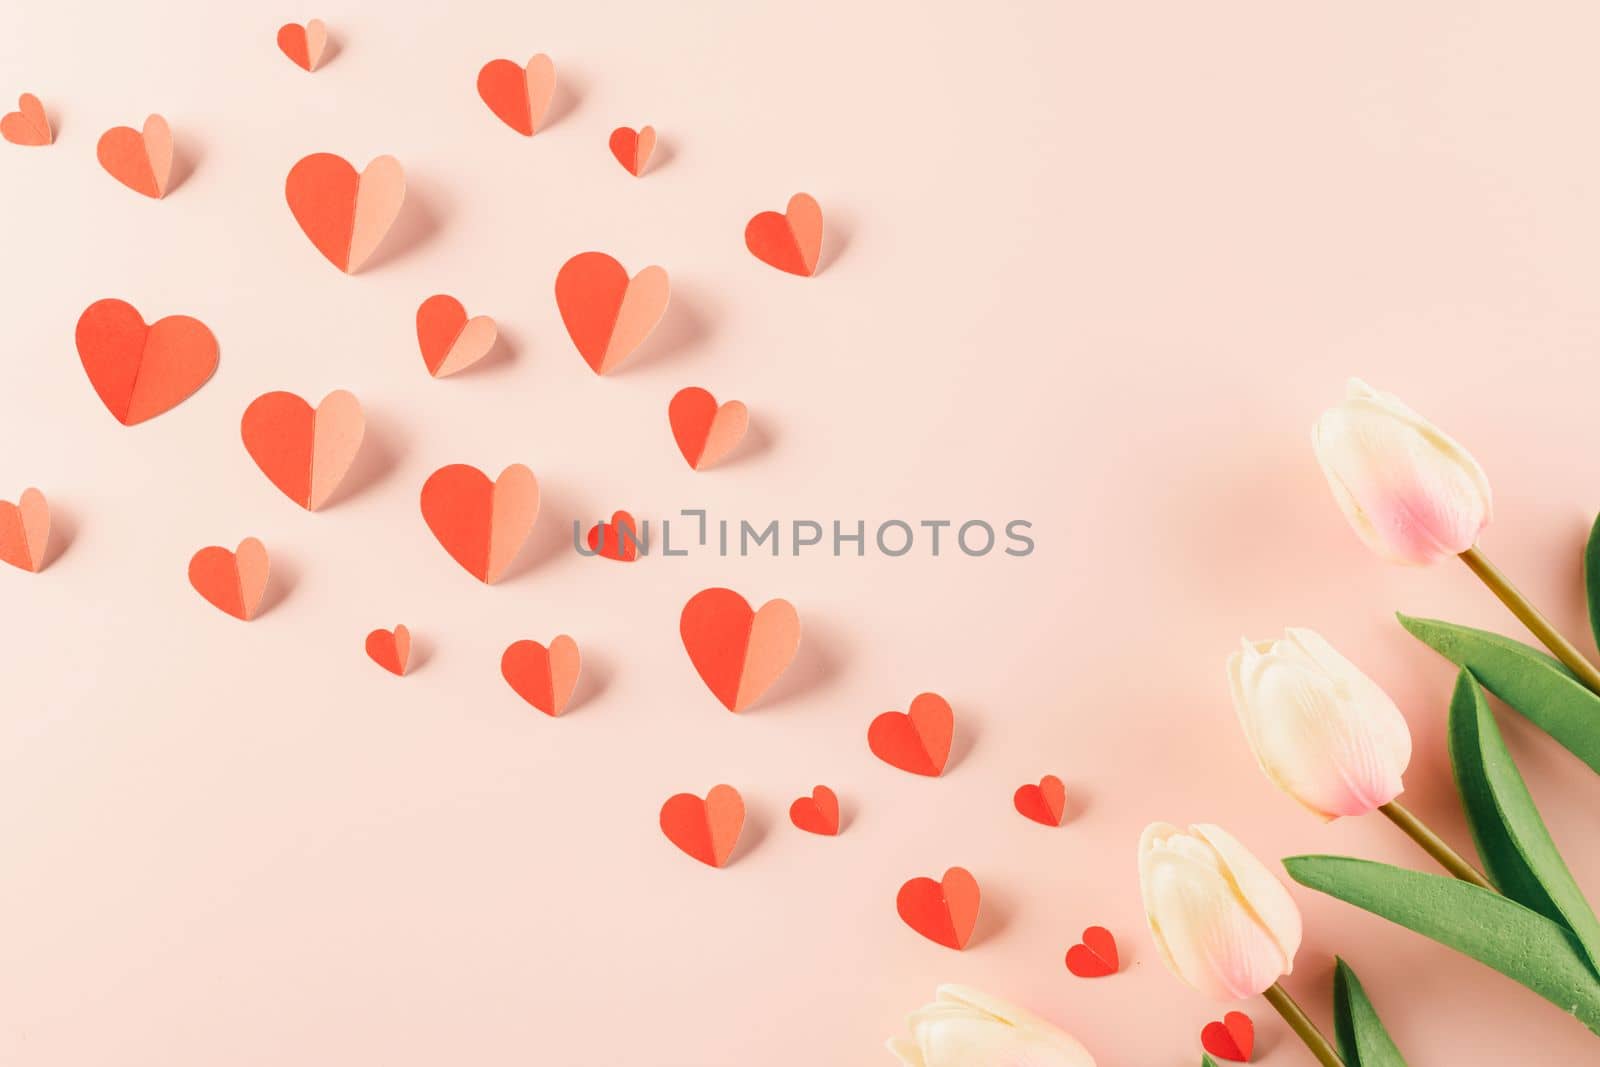 Happy Valentines Day background by Sorapop